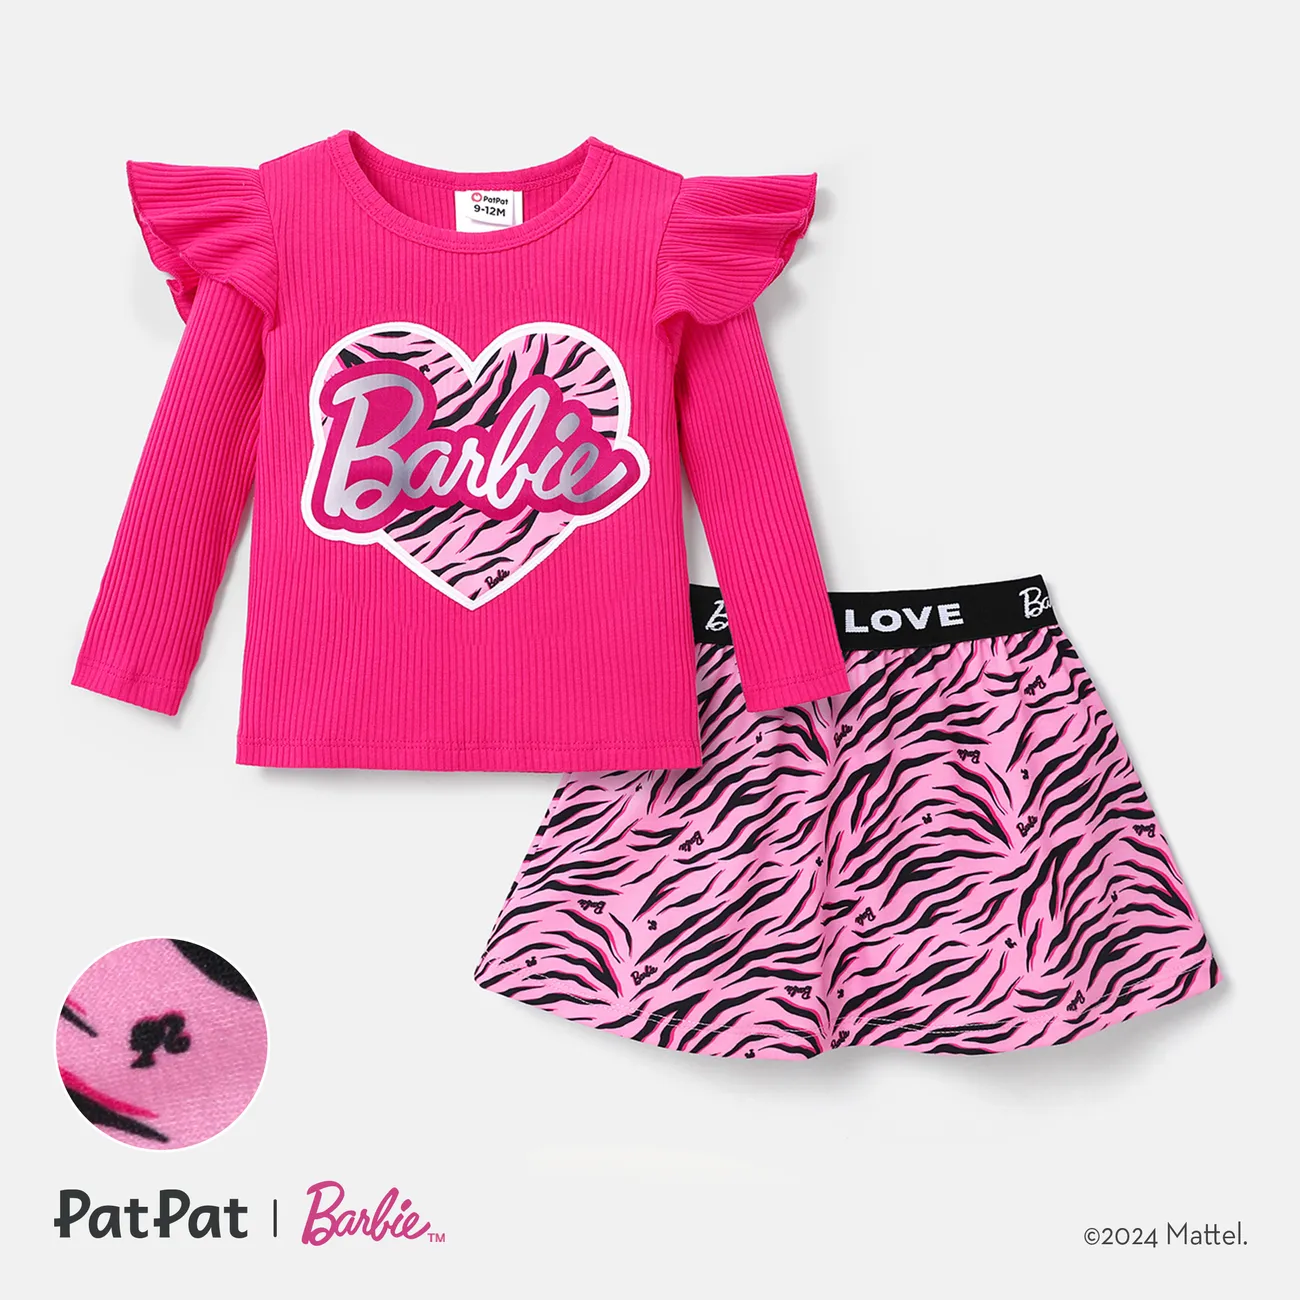 Barbie Heart Graphic Printed Baby Tee